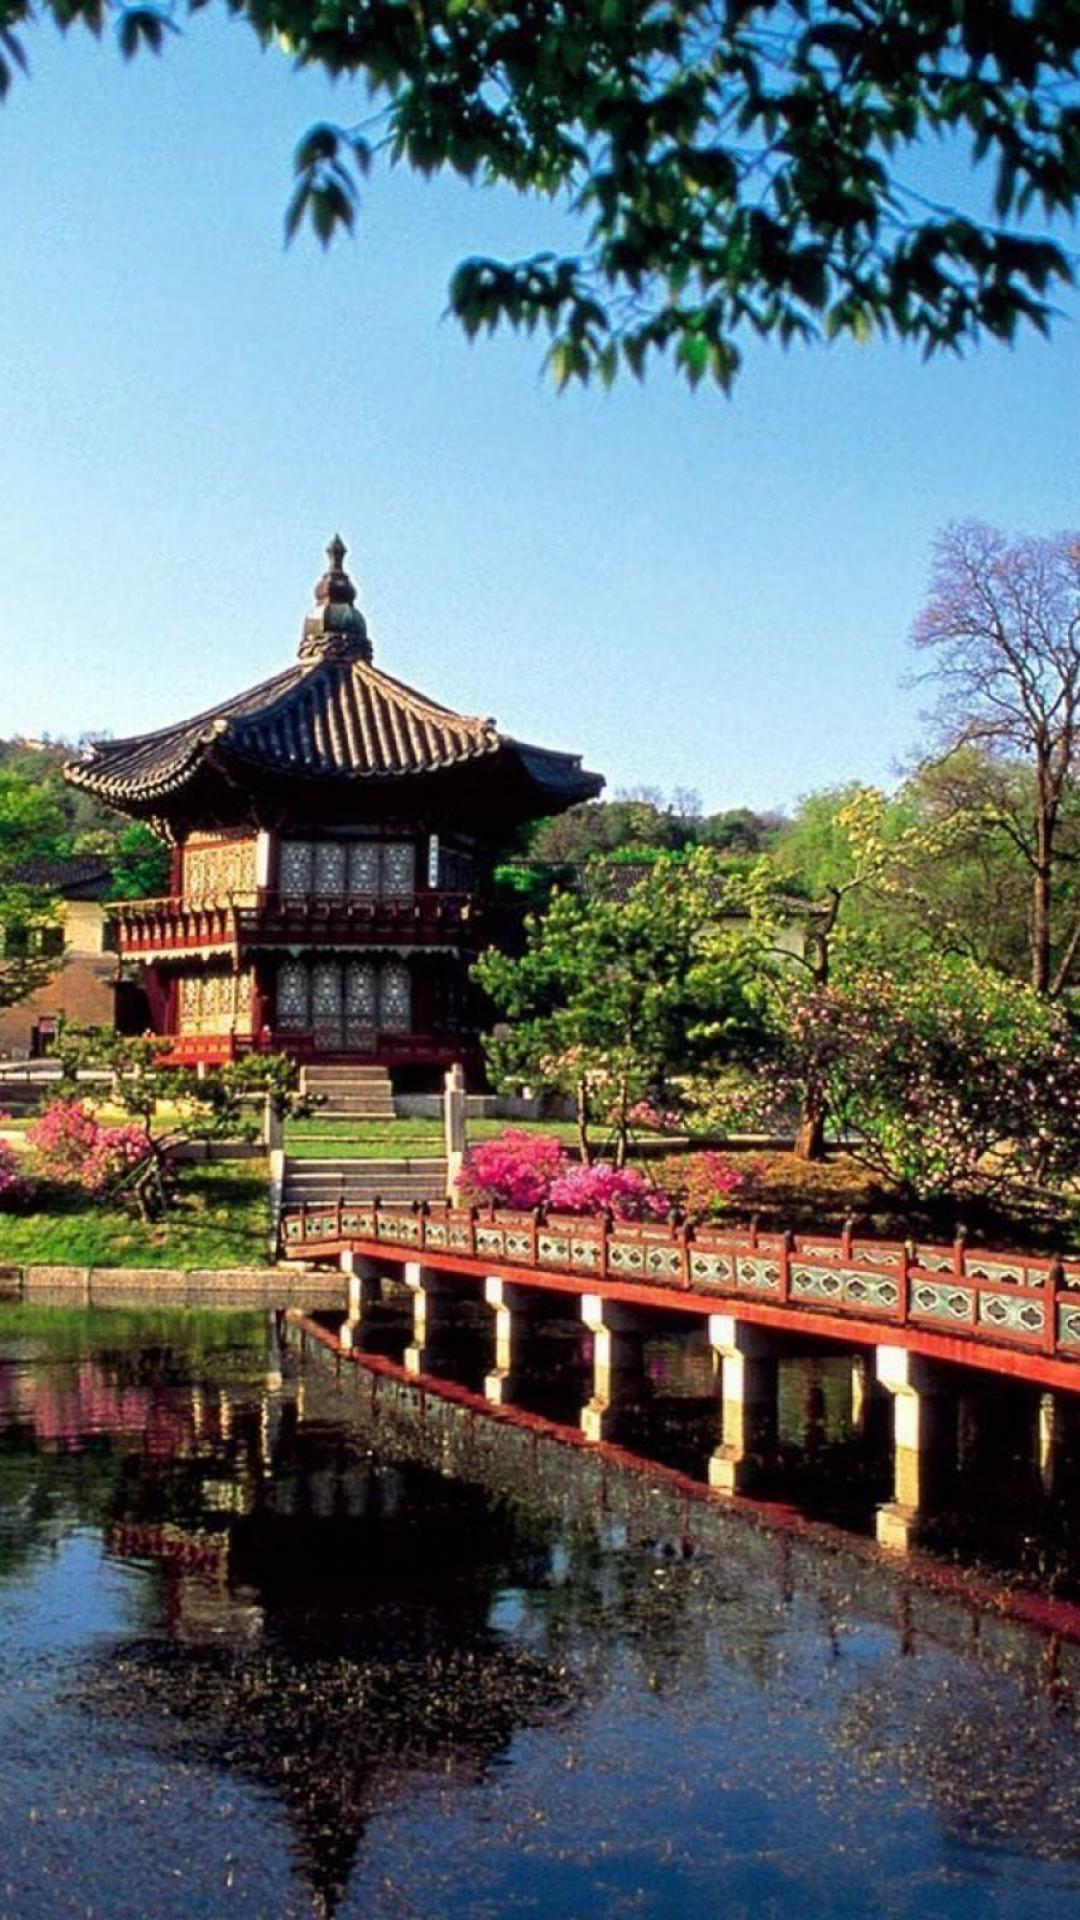 sfondi iphone seoul,architettura cinese,paesaggio naturale,architettura,architettura giapponese,acqua